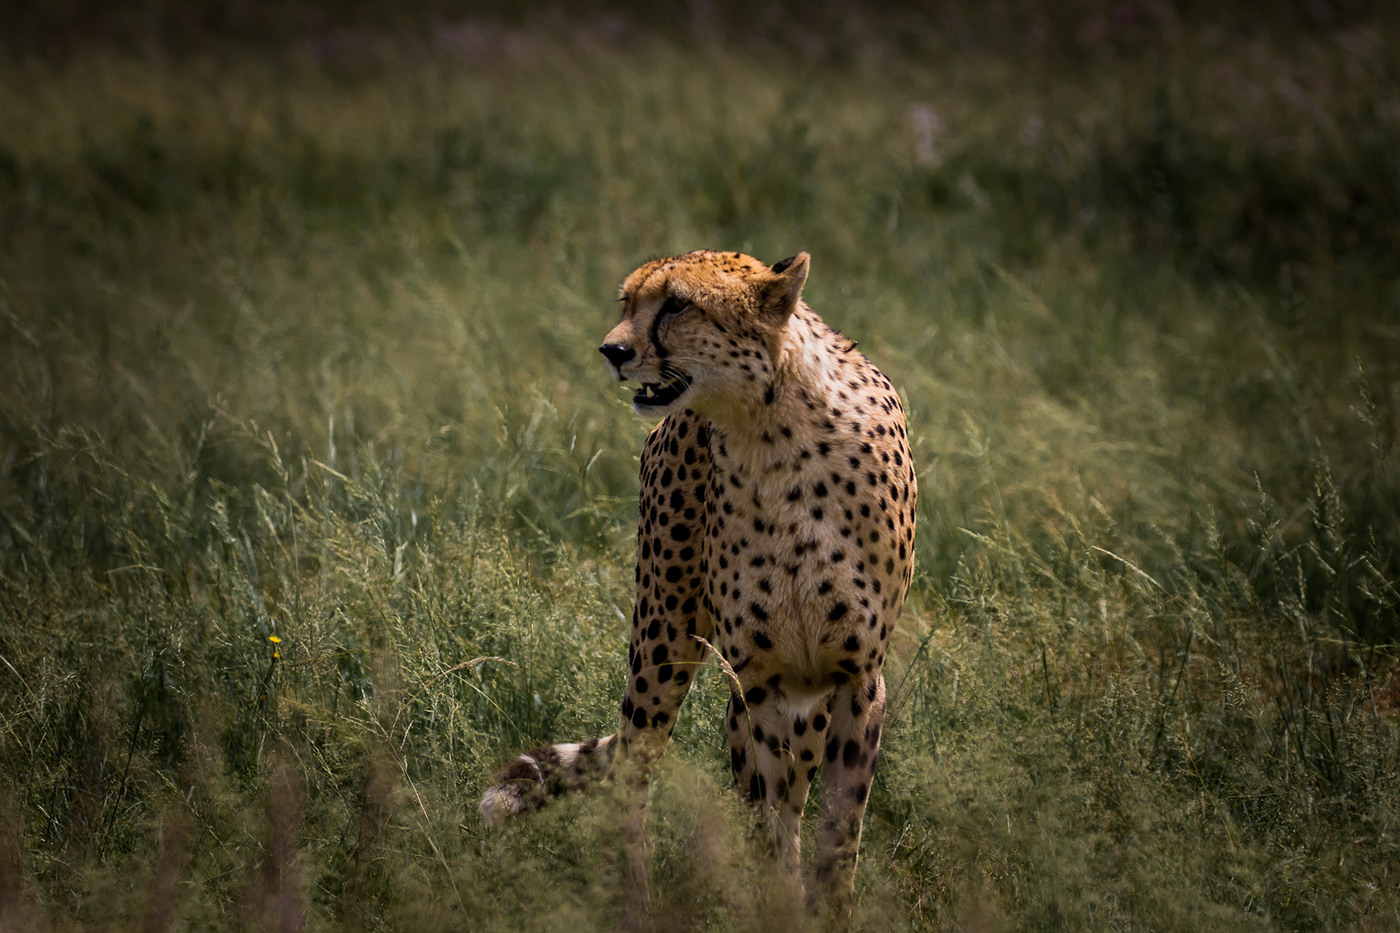 cheetah predator wildlife africa big cat Nature outdoors conservation